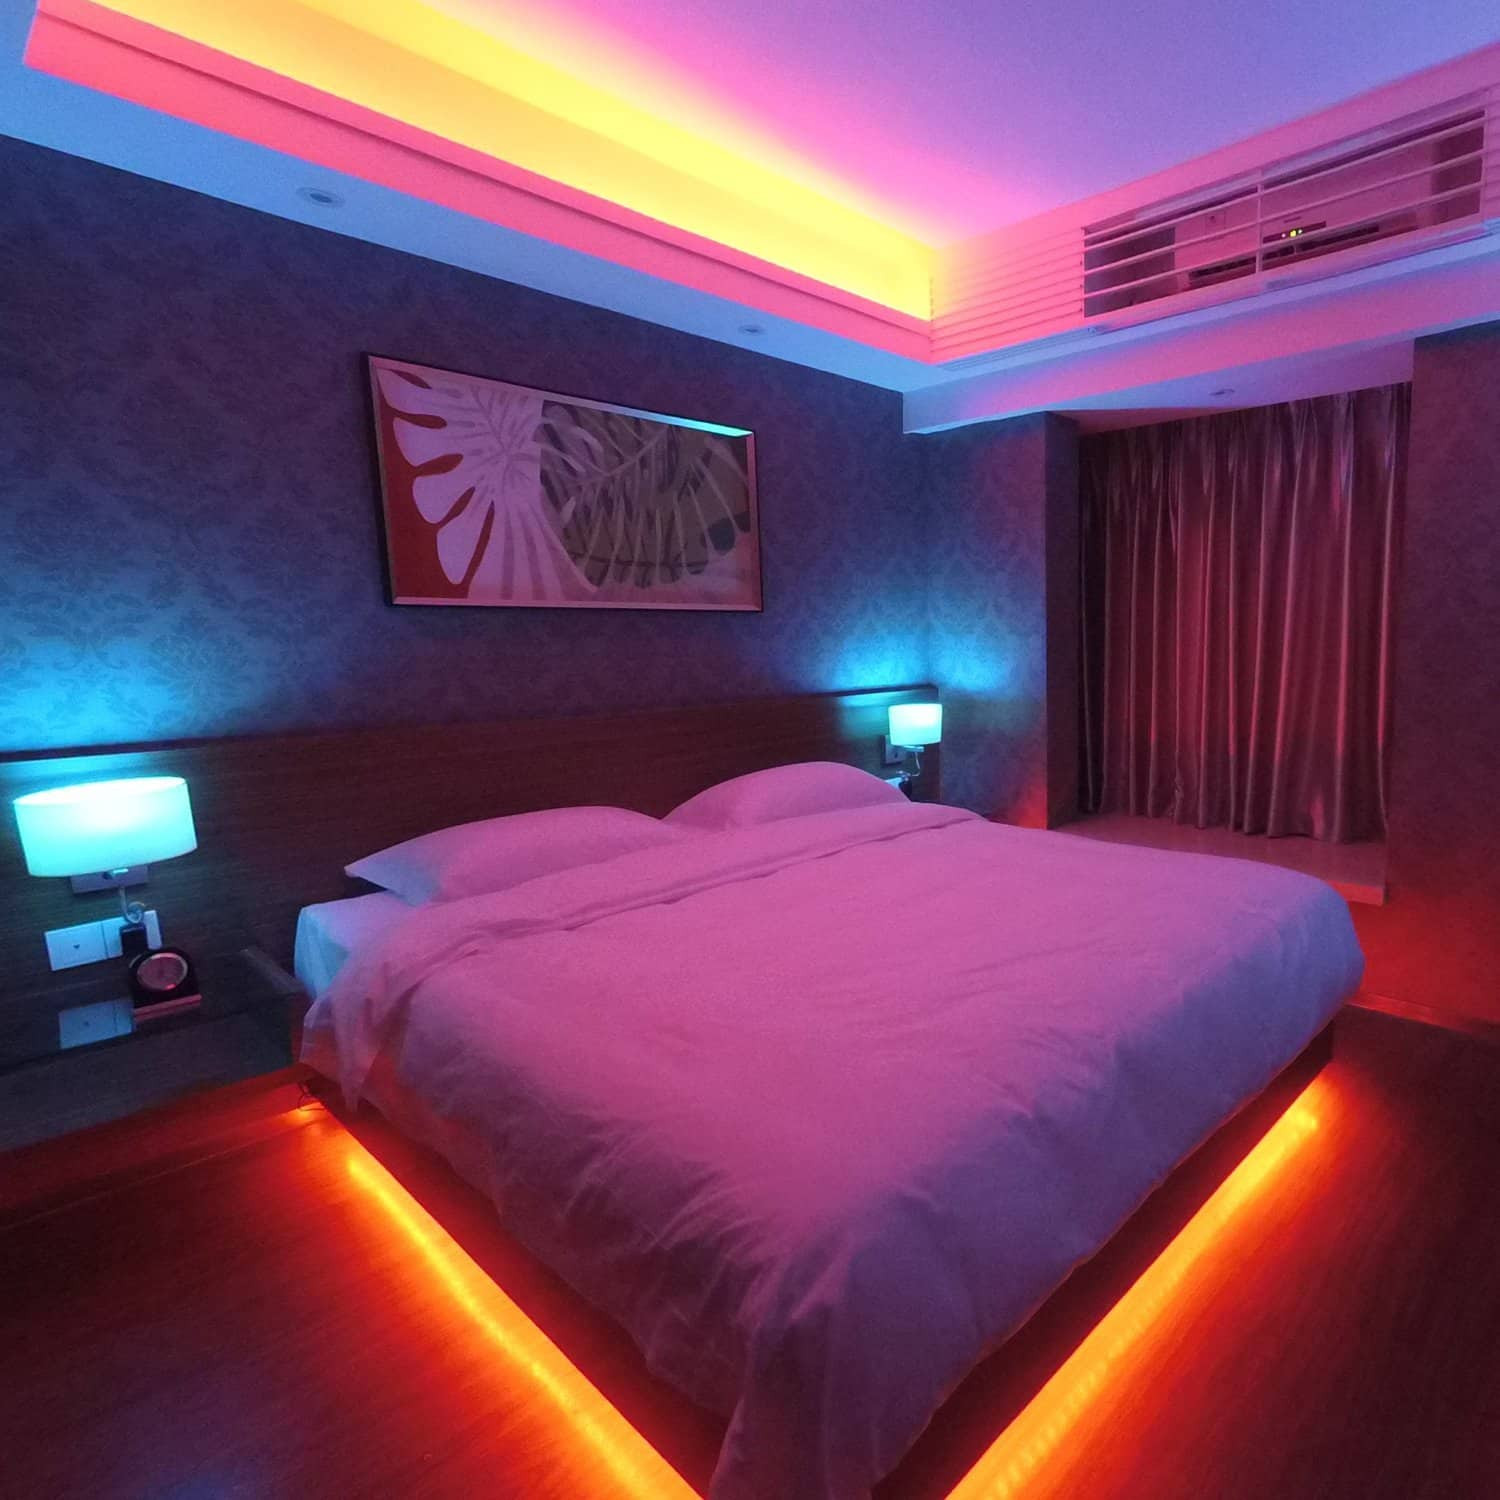 Led Bedroom Lights
 Revogi Smart Color LED Light Strip Reviews Coupons and Deals